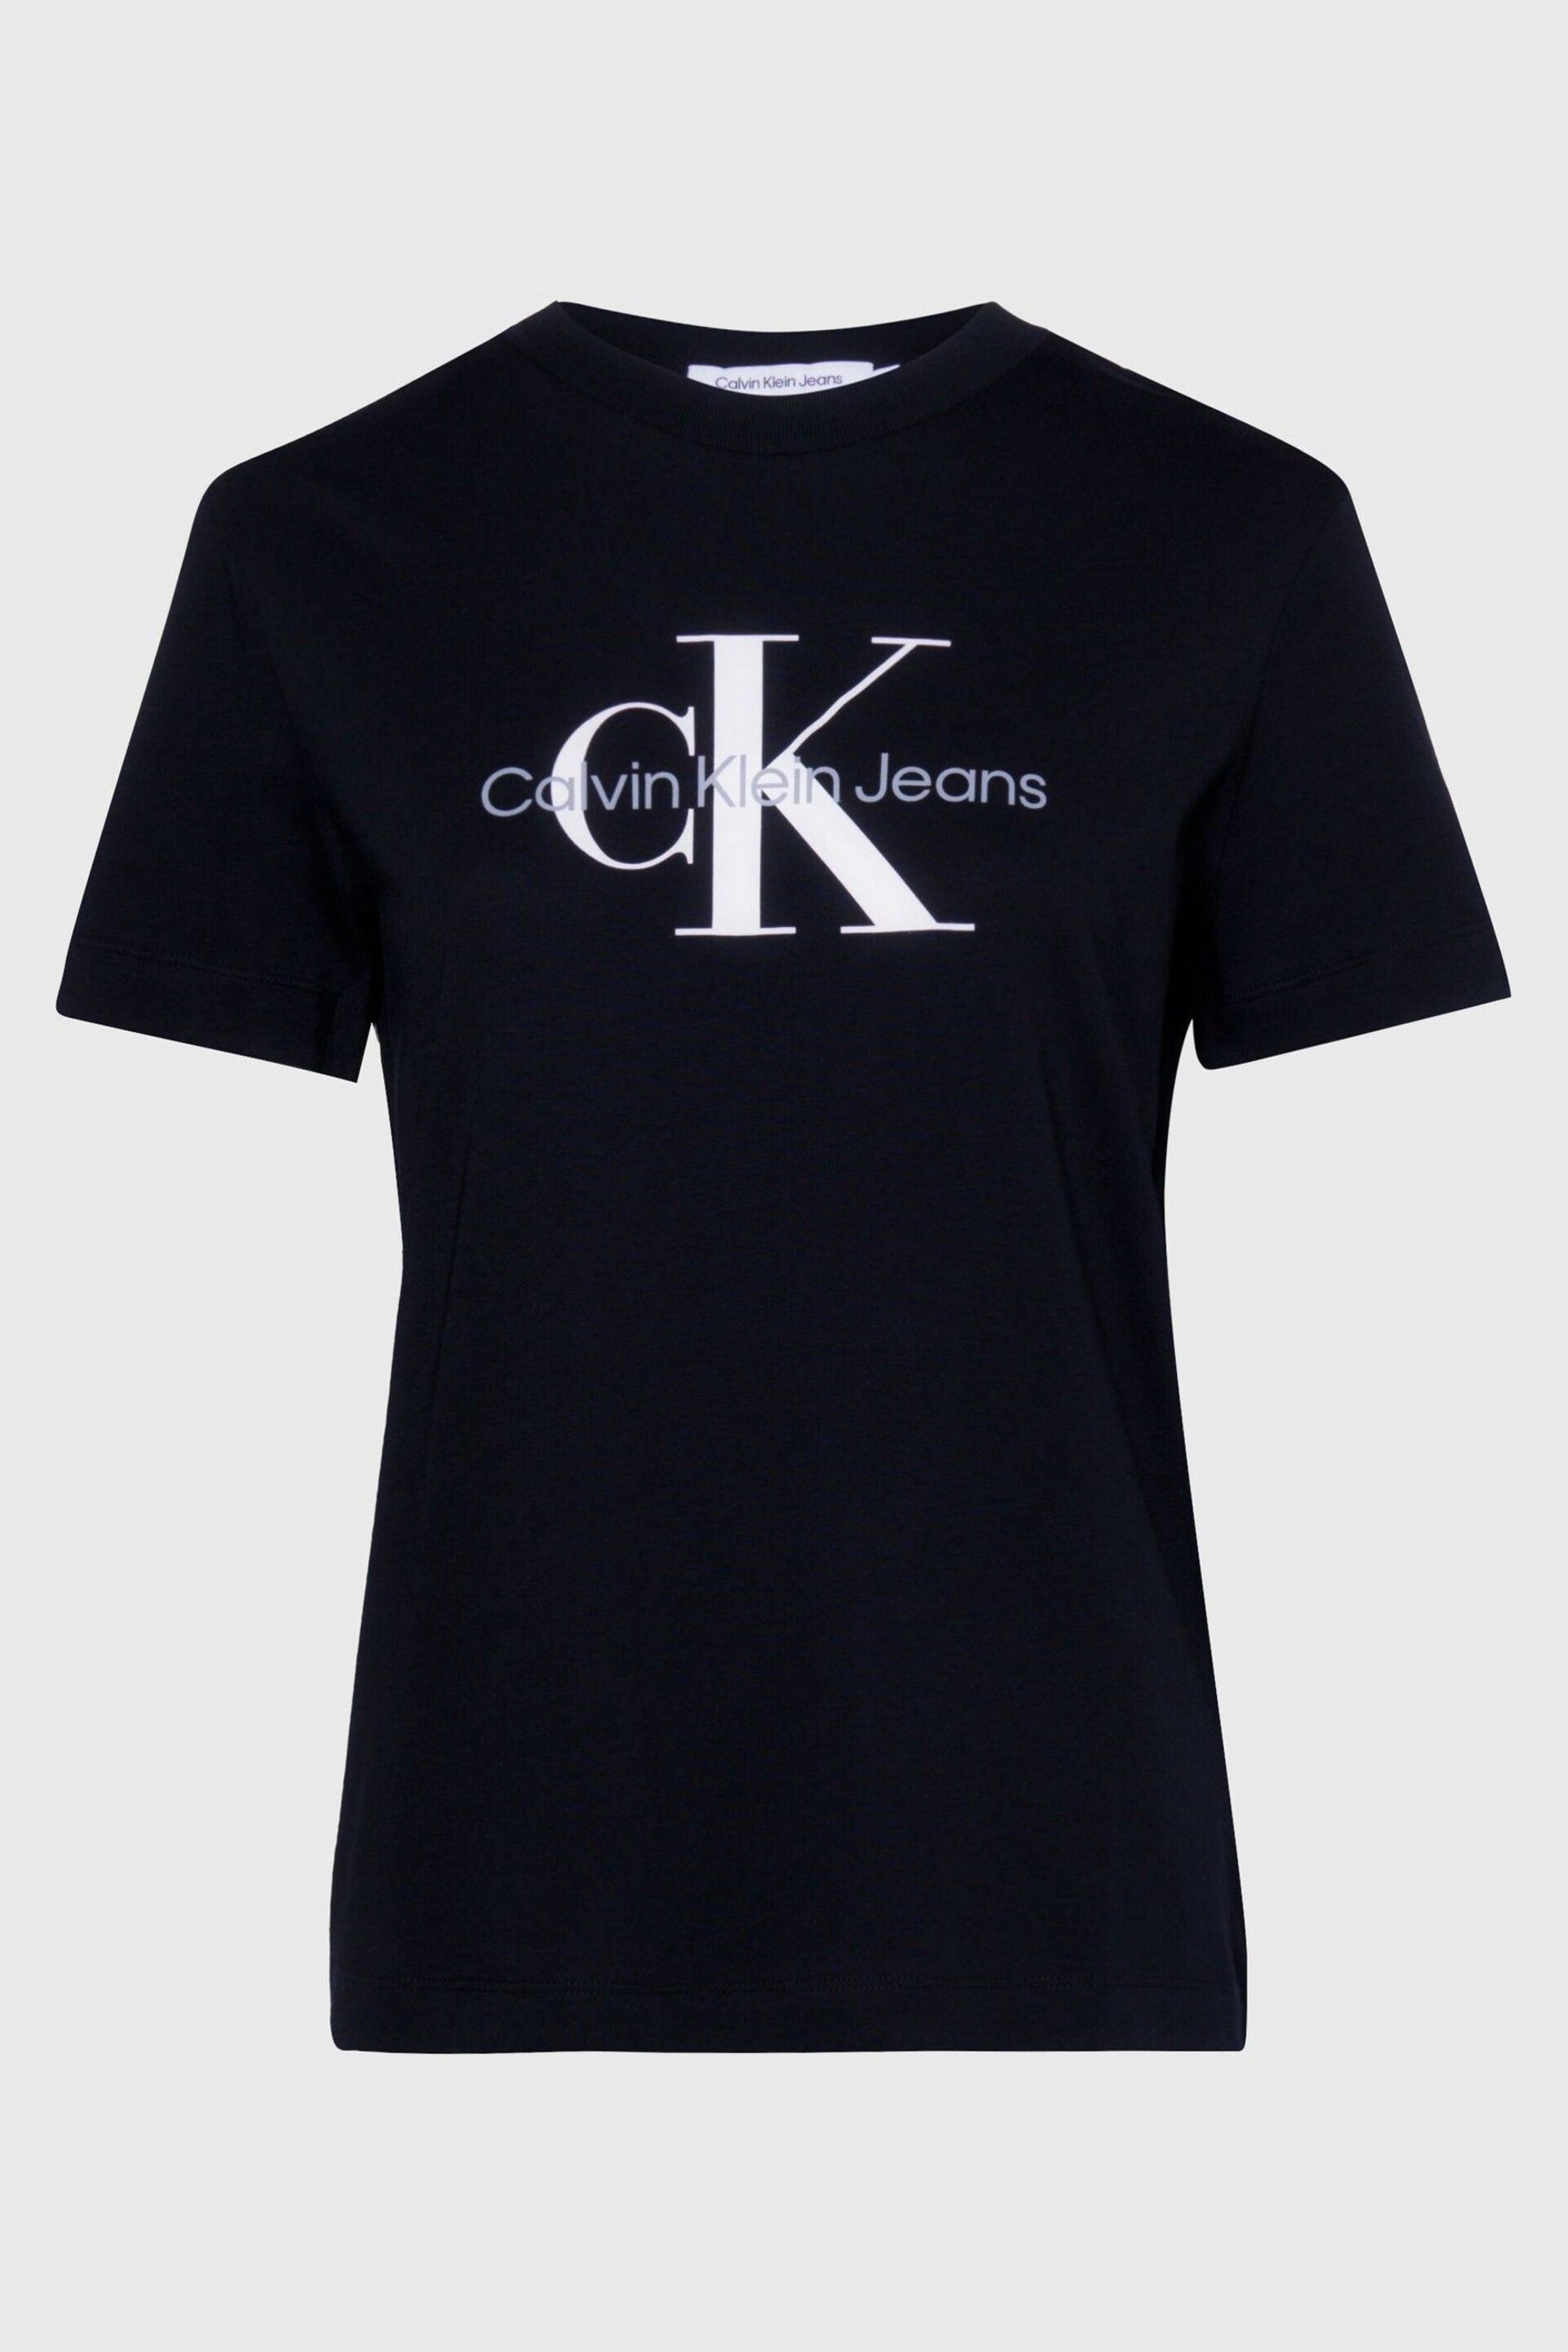 Calvin Klein Jeans Black Core Monogram Regular T-Shirt - Image 4 of 5